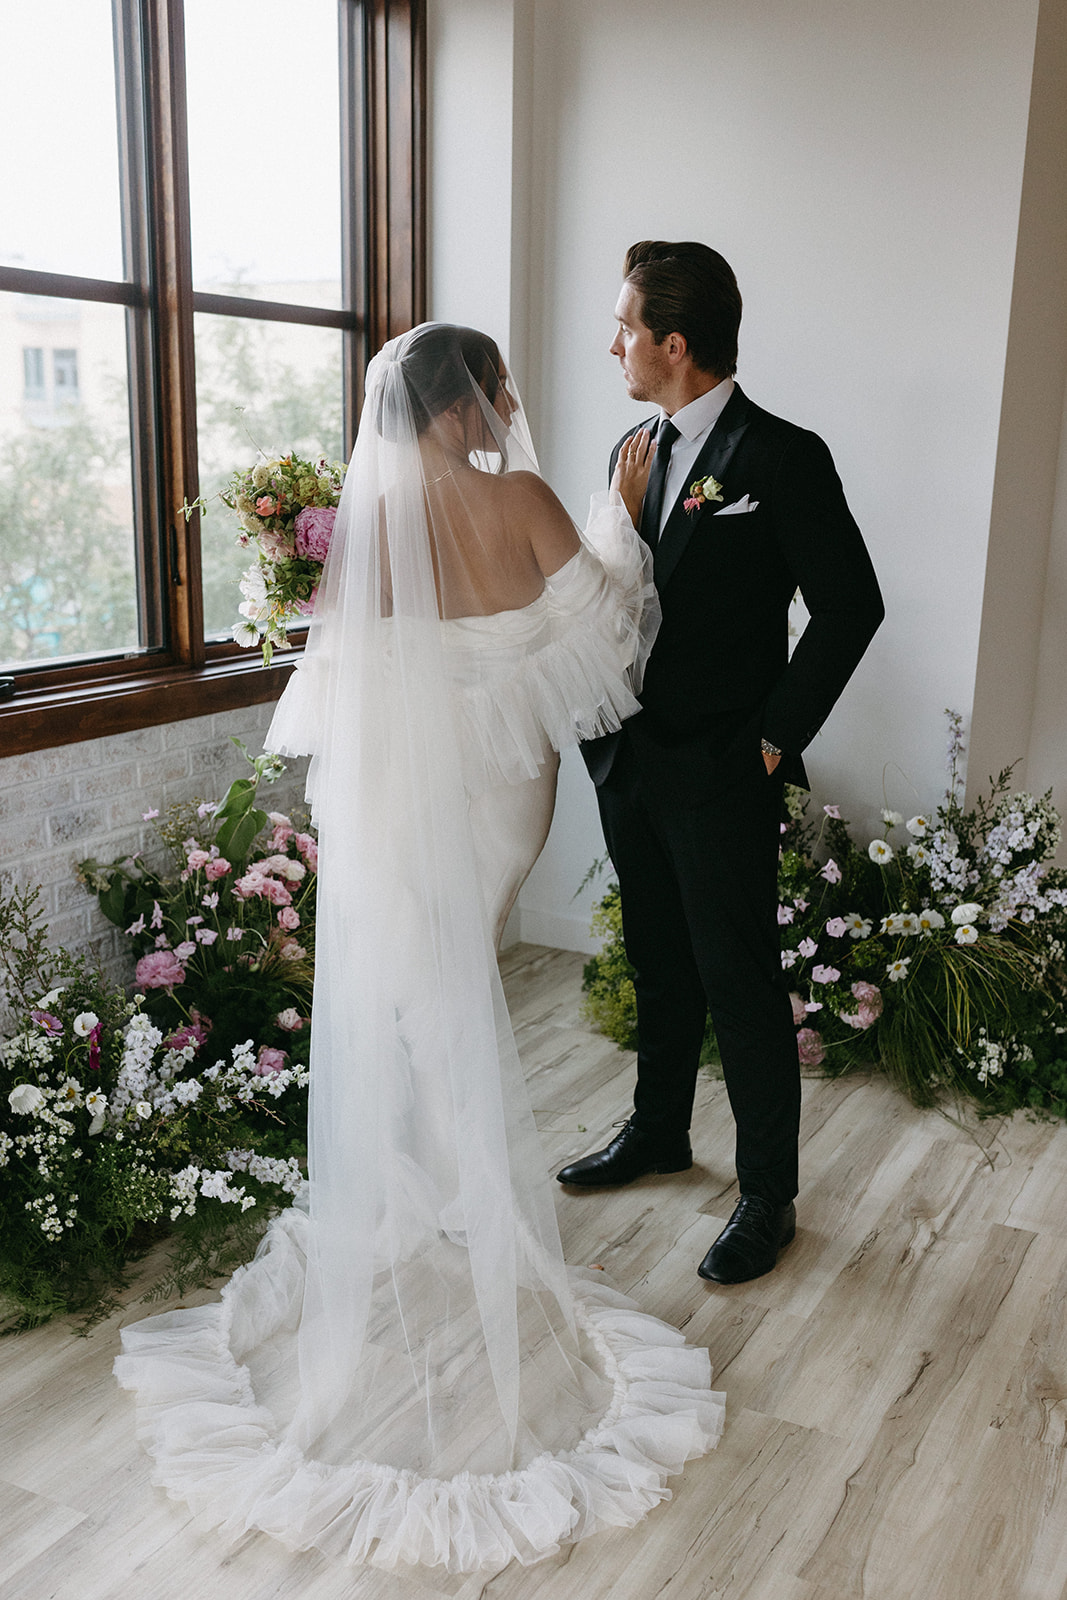 A bride wearing an off-the-shoulder dress and chapel-length bridal veil rests her hand on her groom's shoulder. 